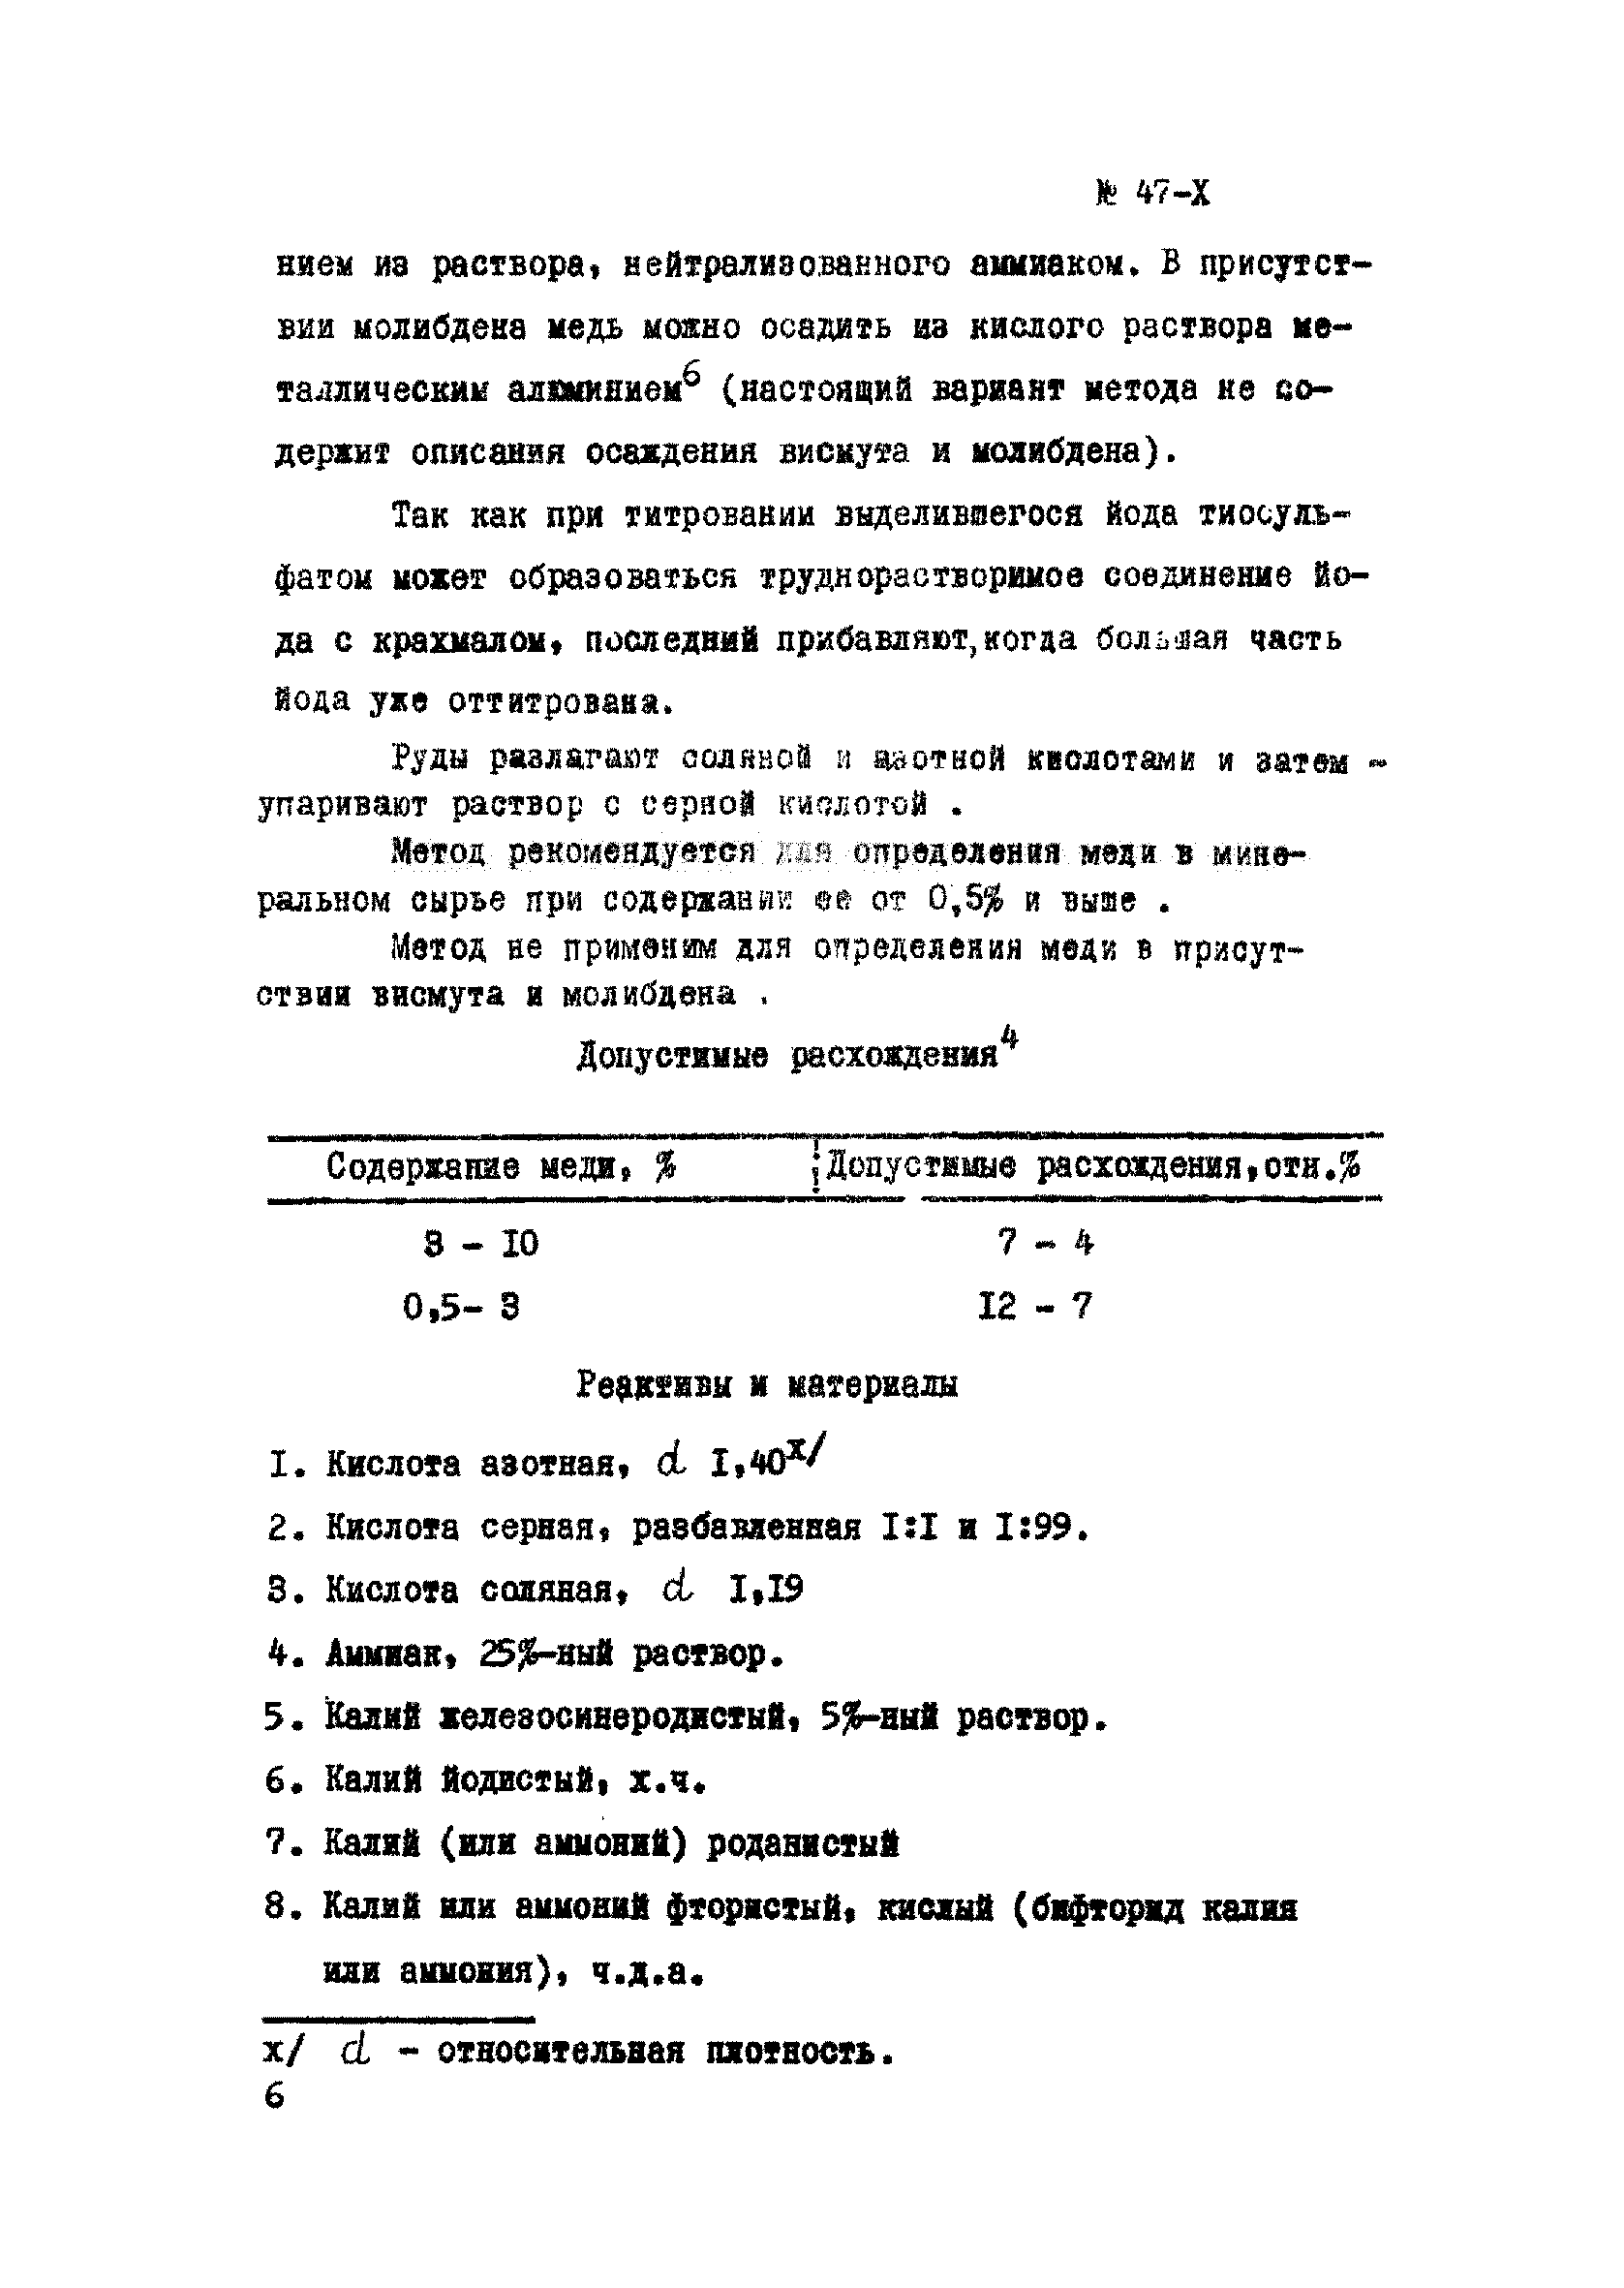 Инструкция НСАМ 47-Х